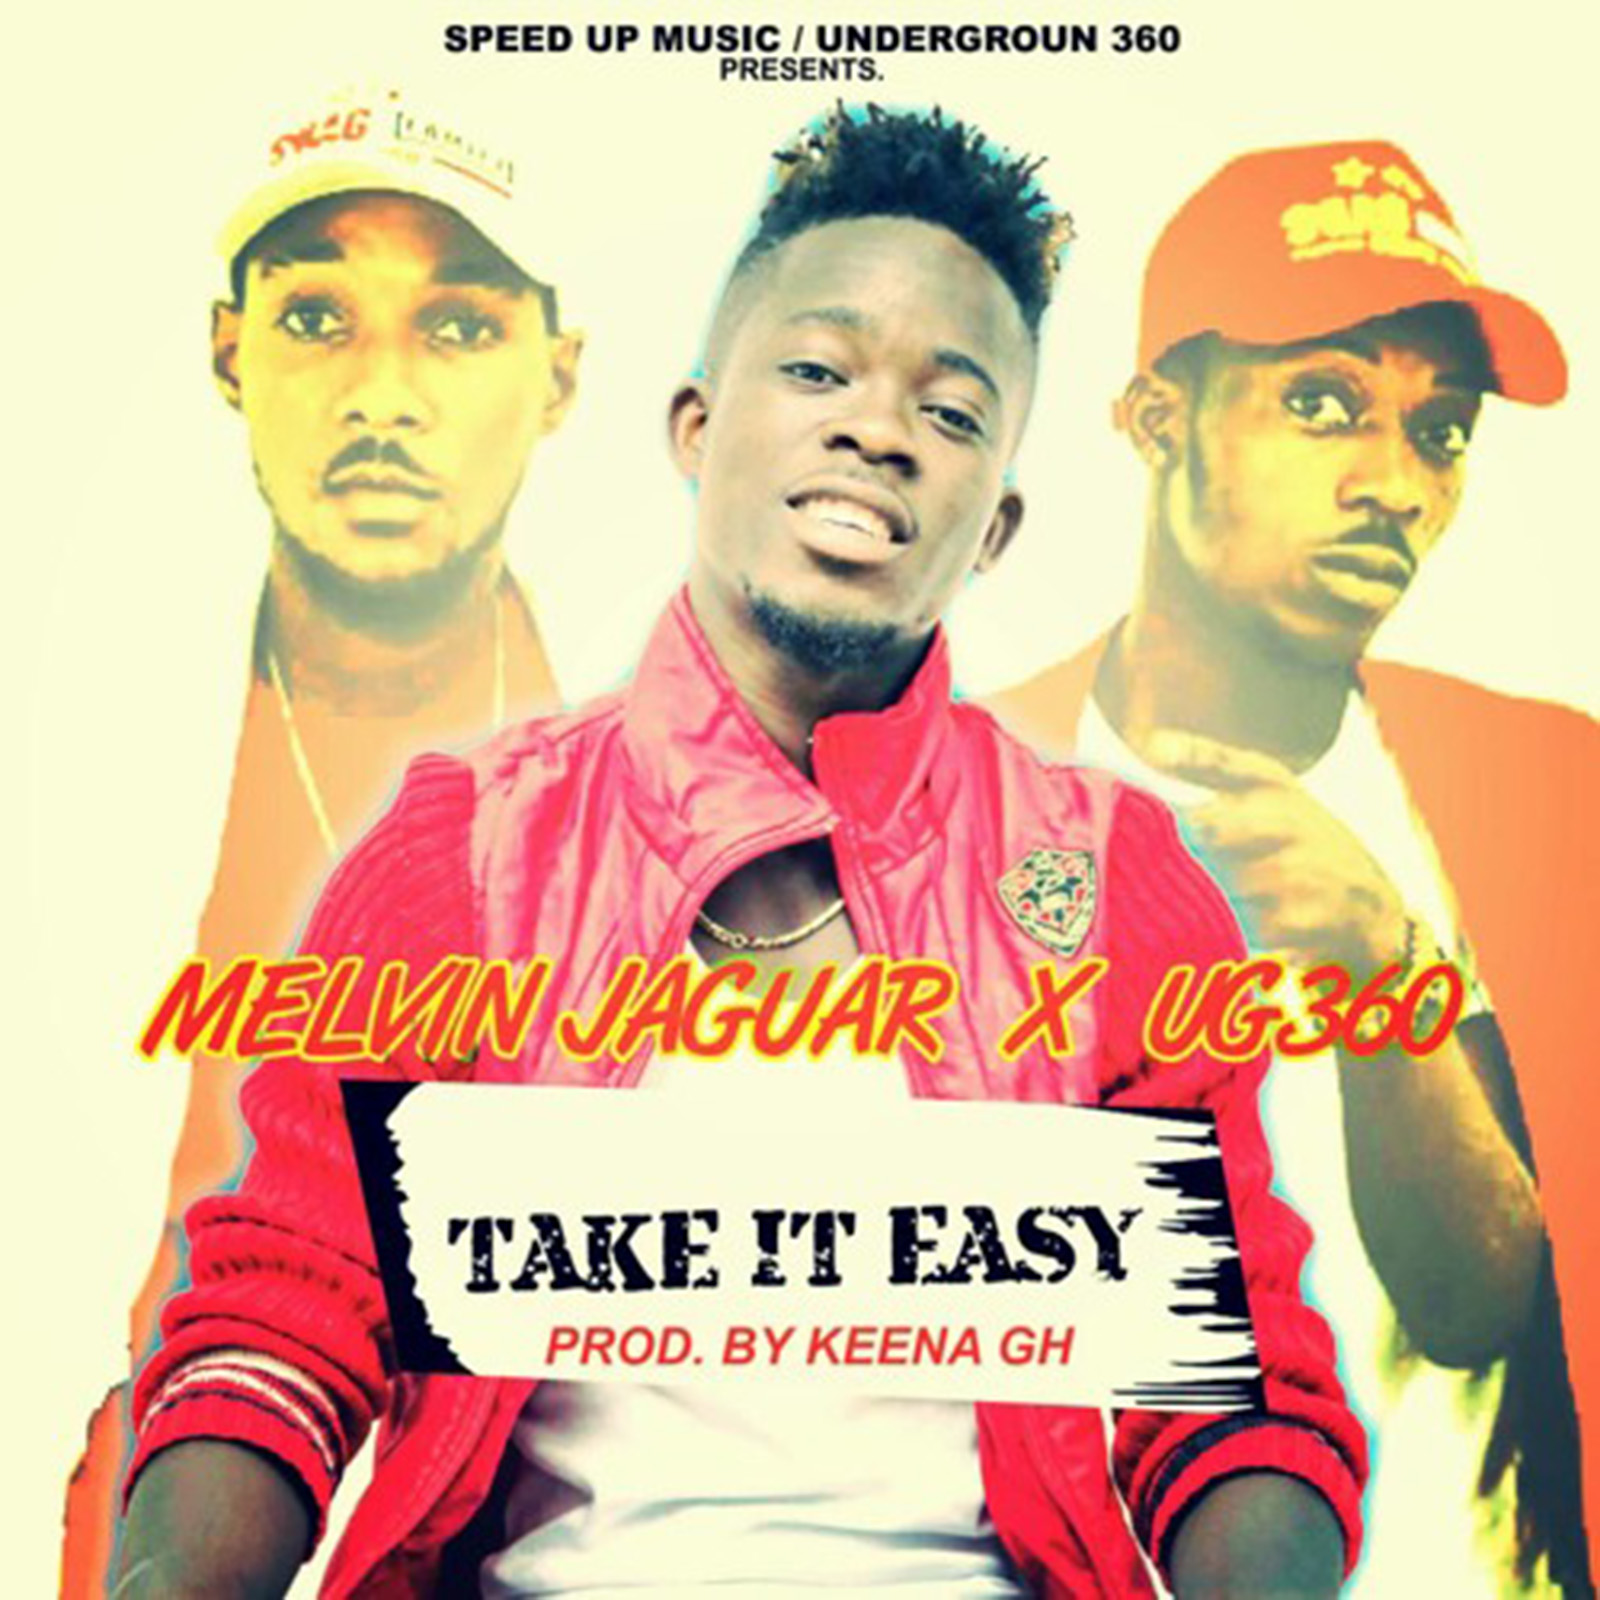 Take It Easy by Melvin Jaguar & UG360